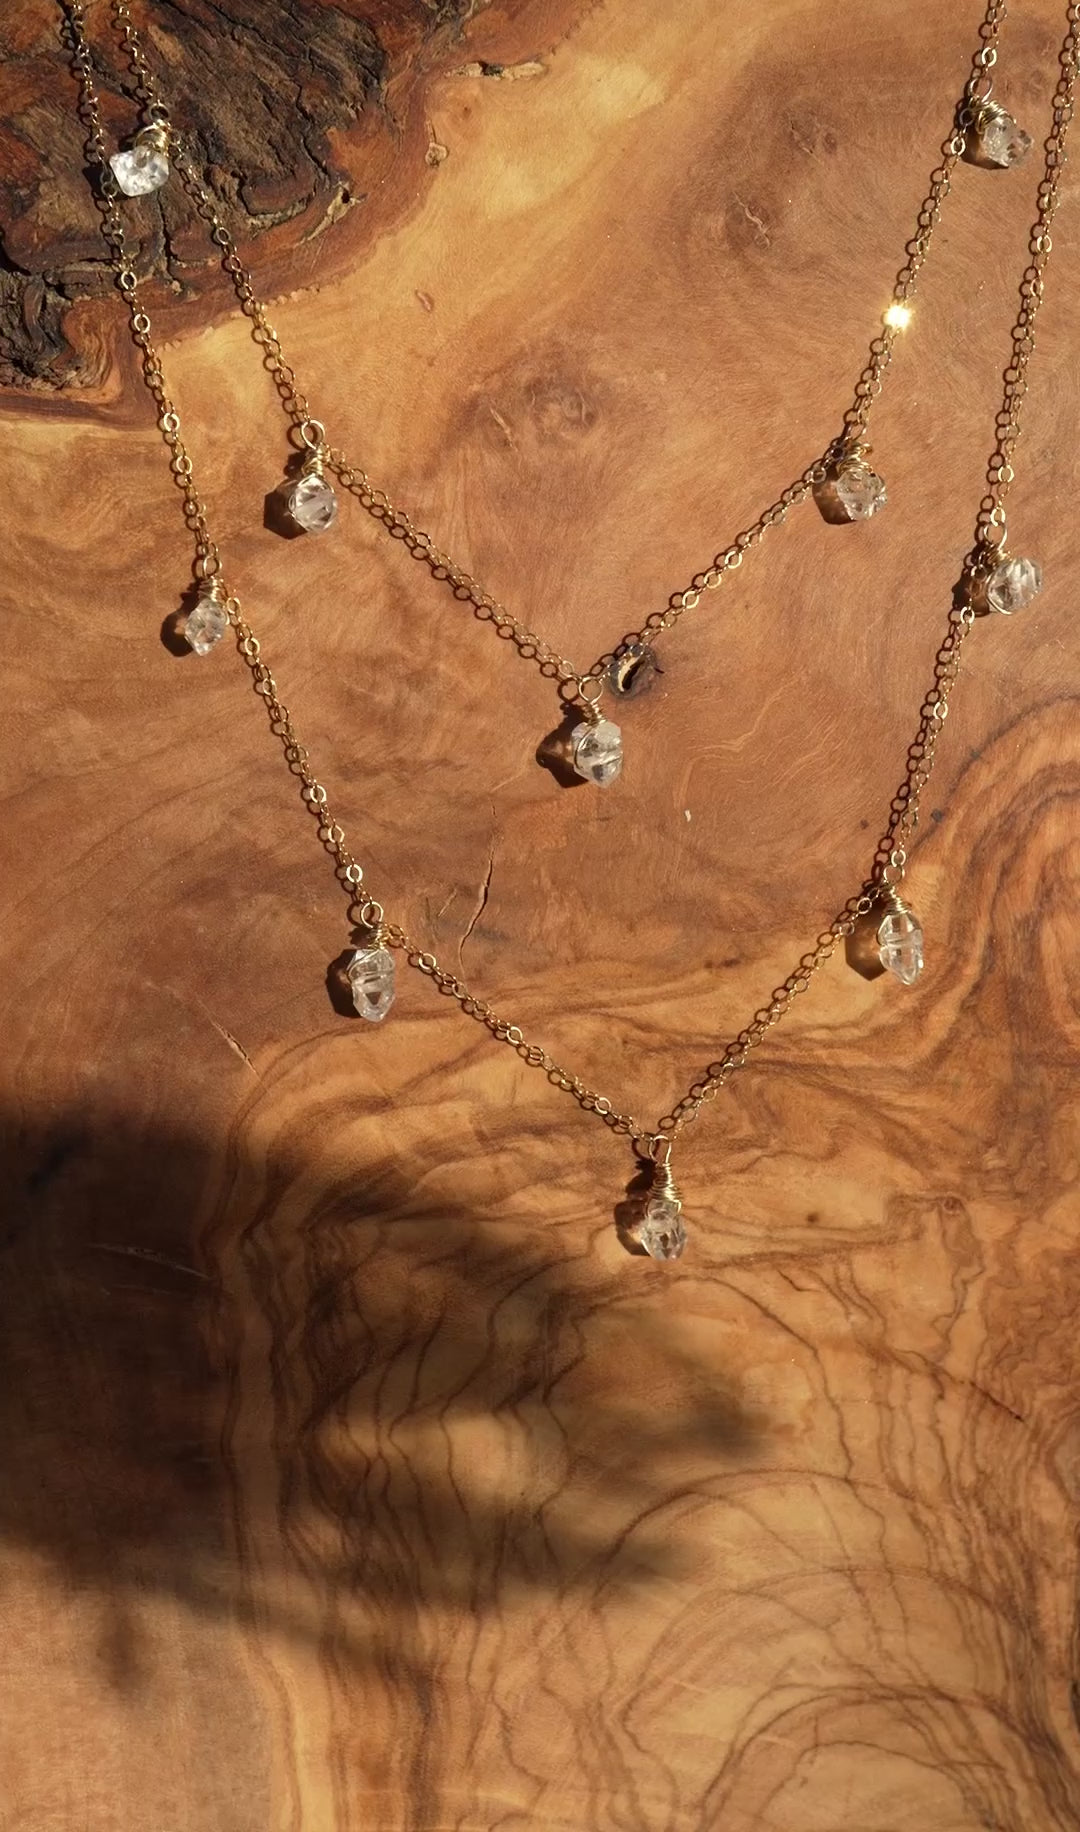 Herkimer Diamond Necklace Rose Gold Filled